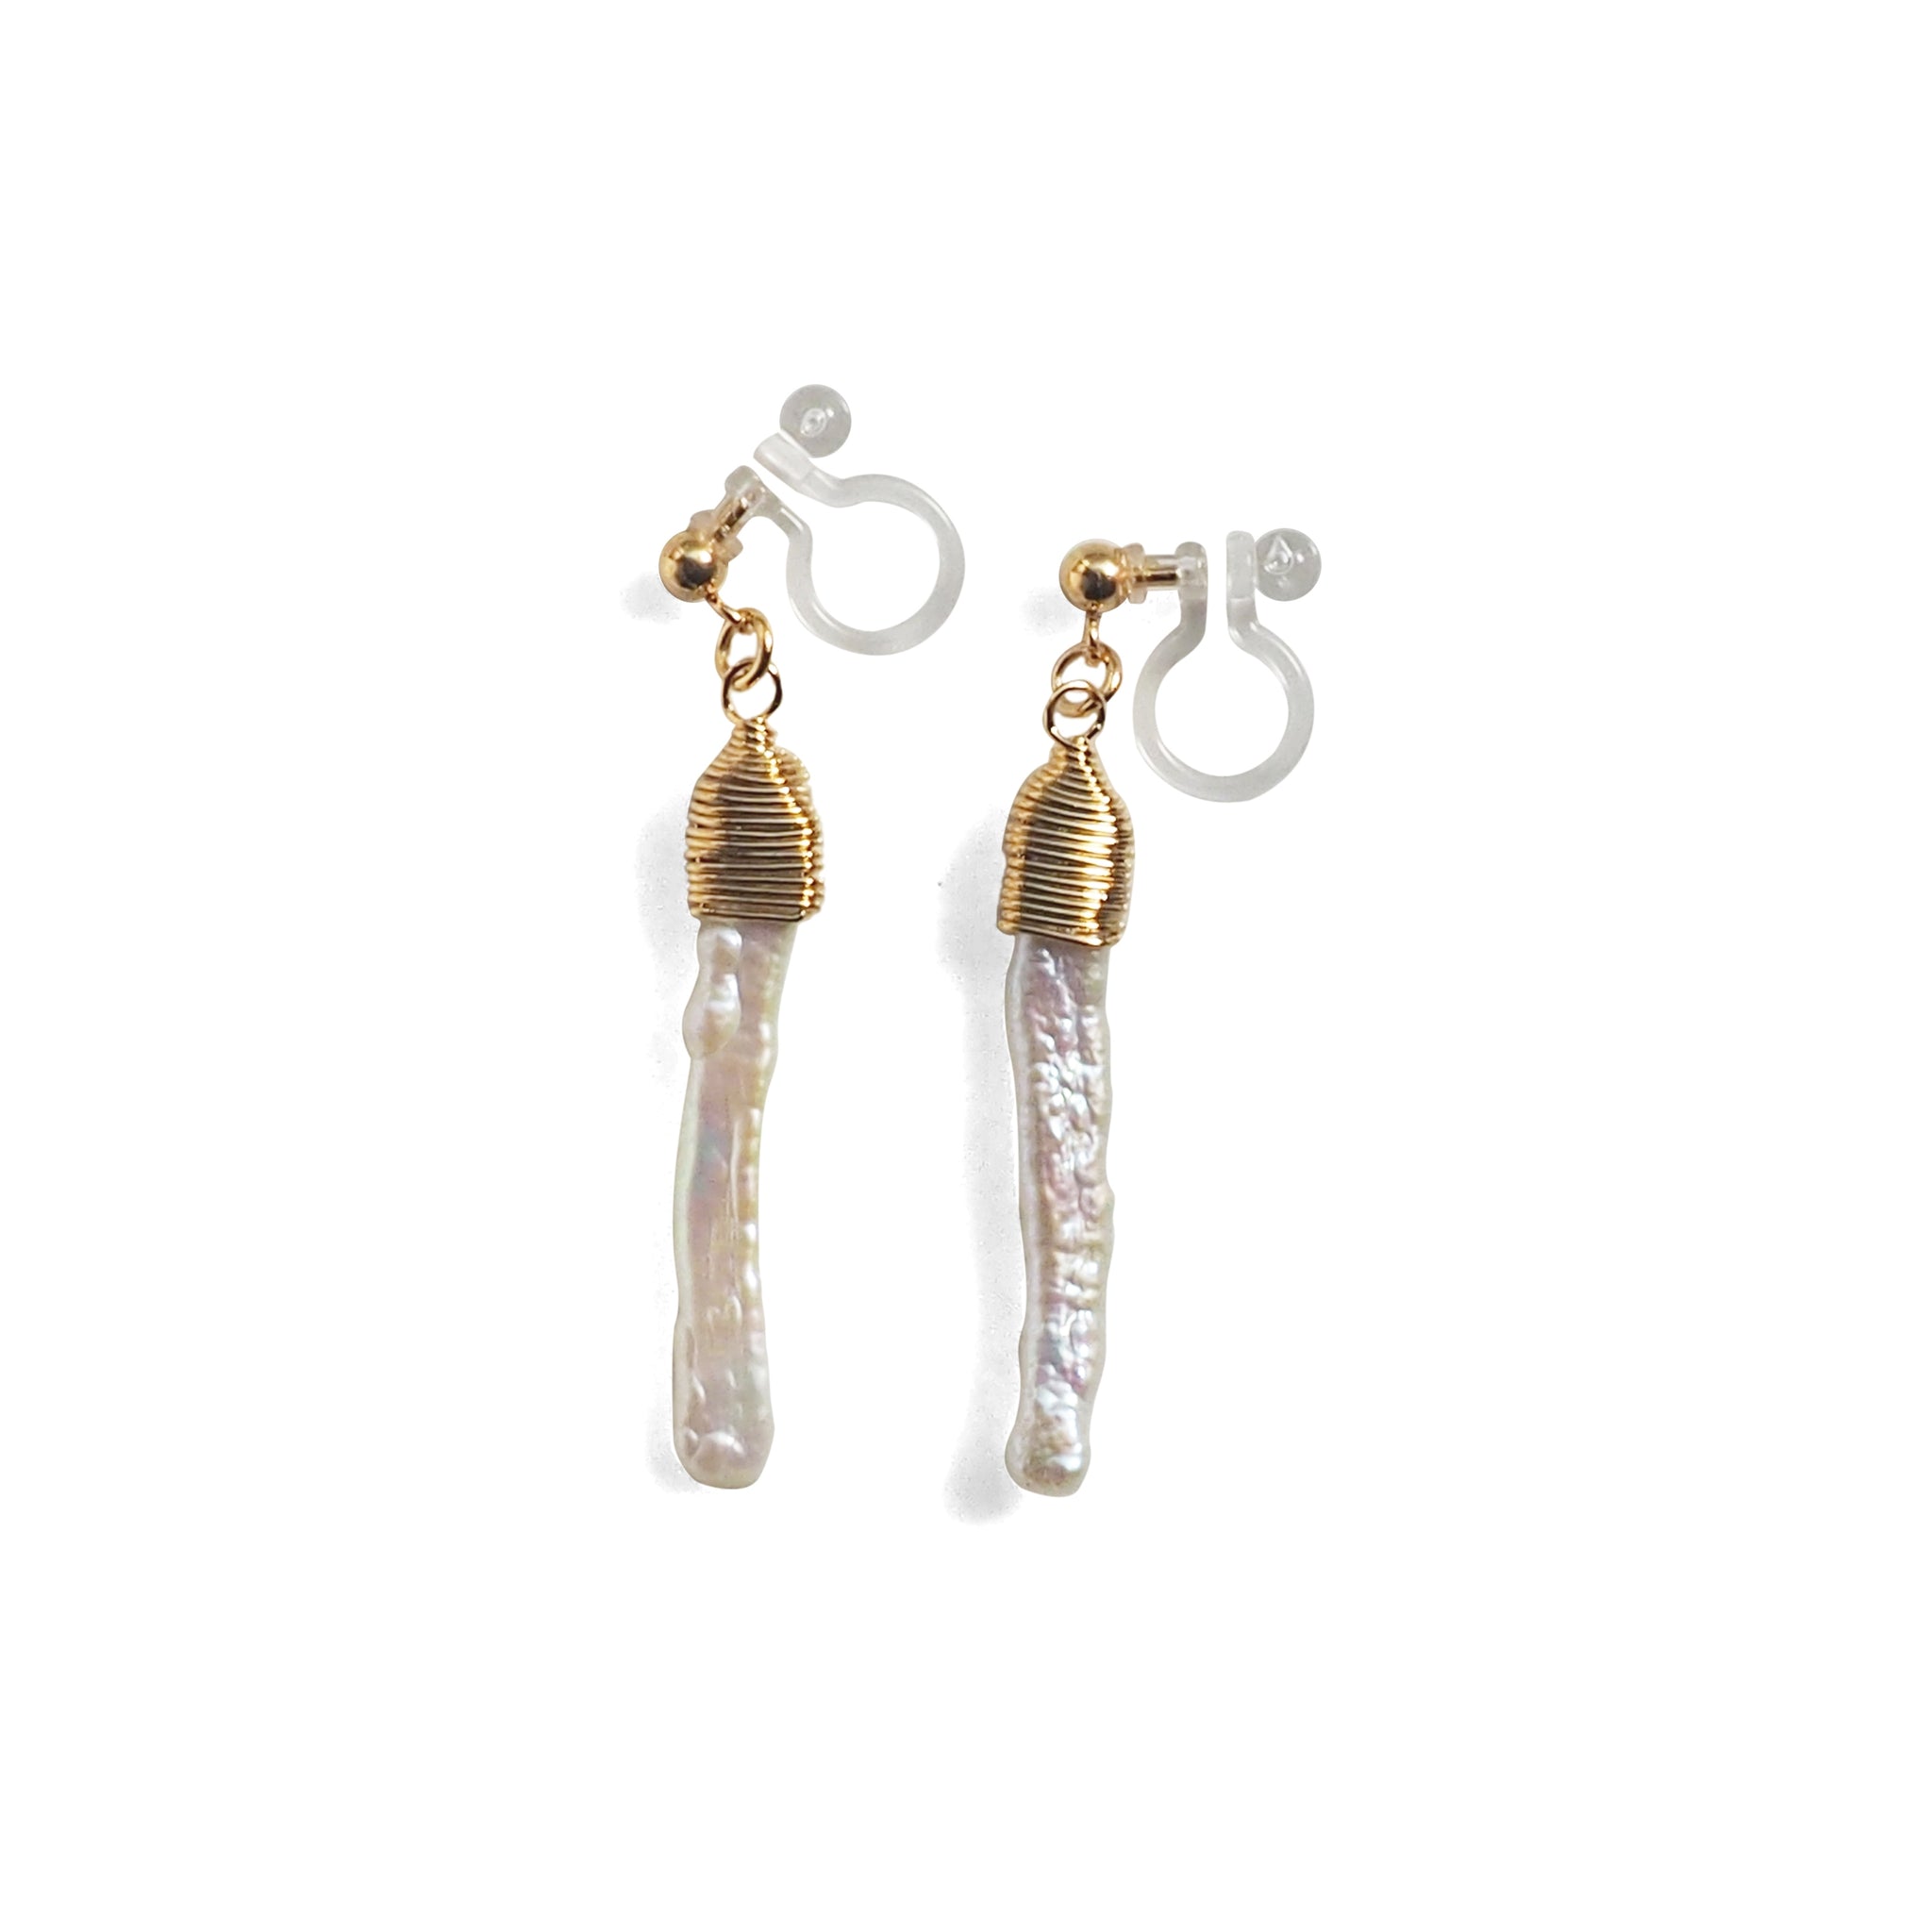 Freshwater pearl bar invisible clip on earrings - Miyabi Grace